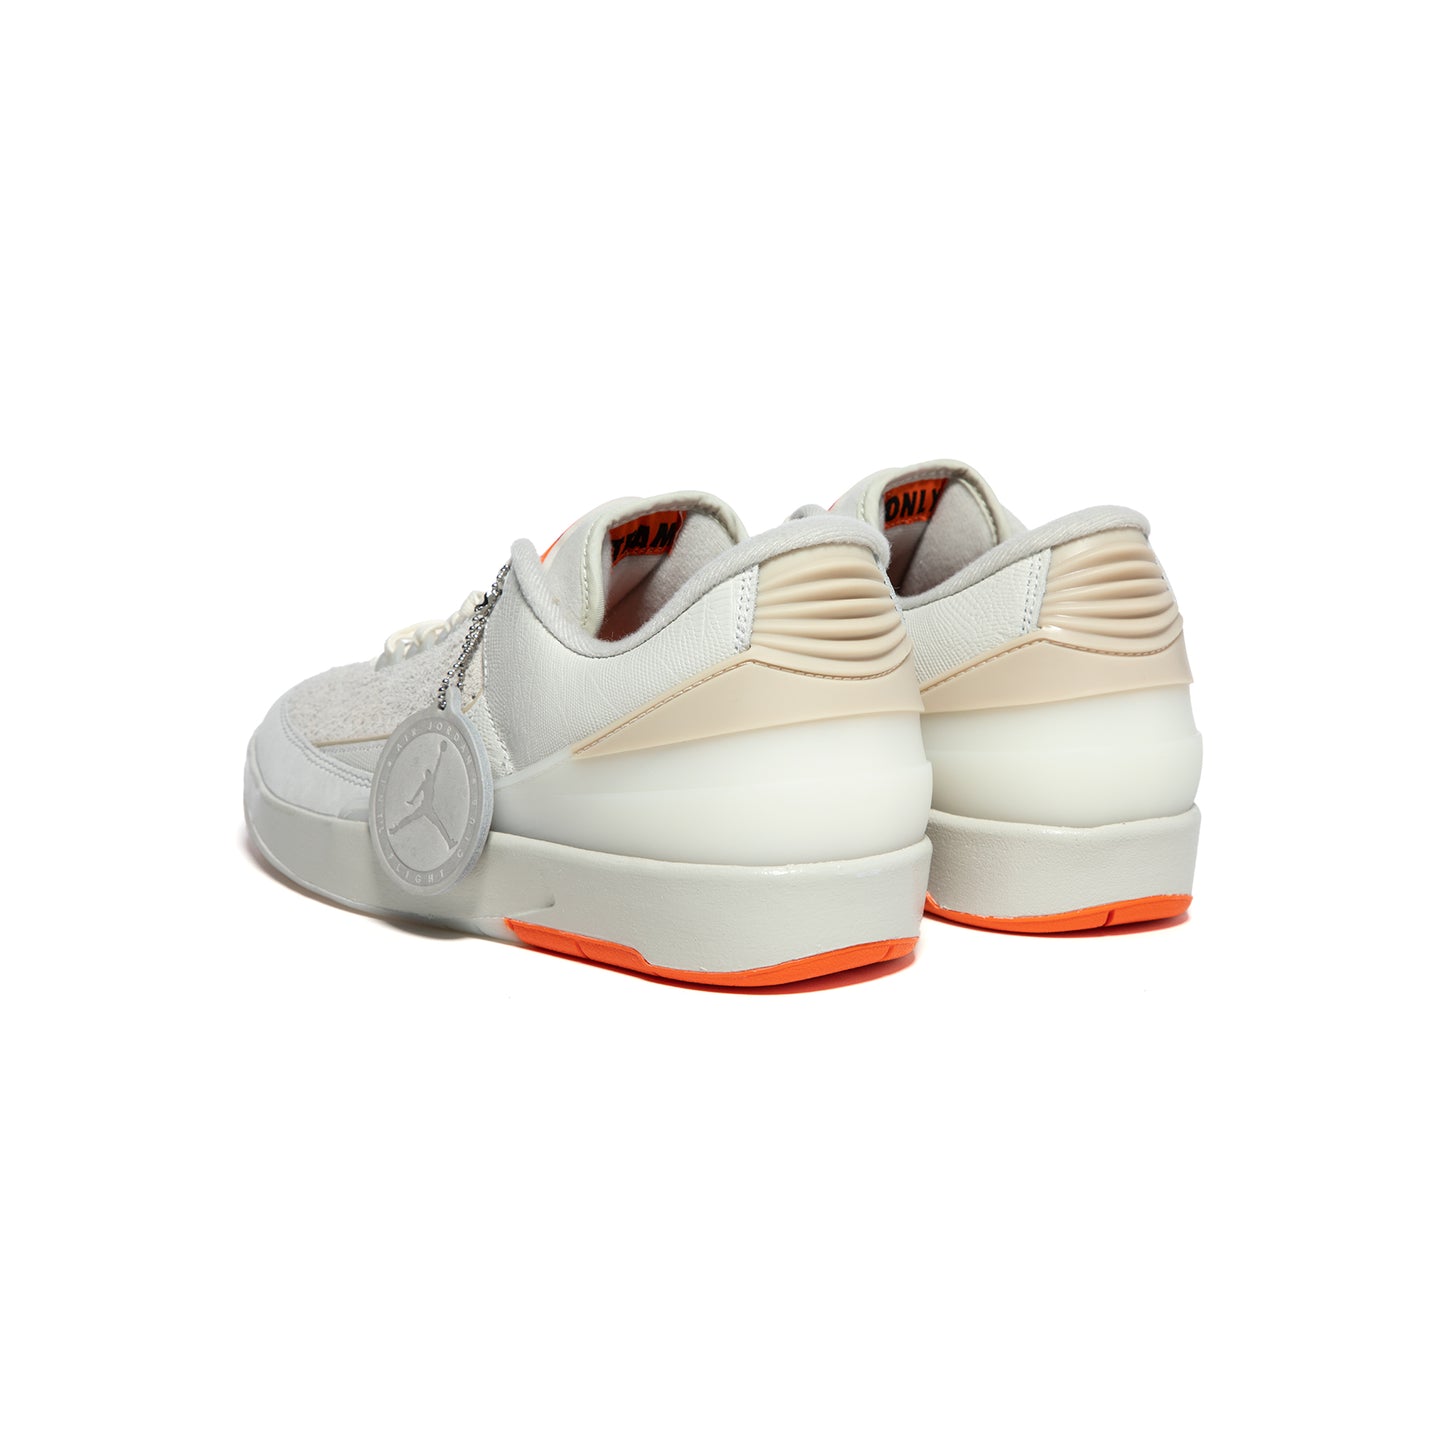 Nike Air Jordan 2 Retro Low SP (White/Sail/Light Bone/Bright Mandarin)